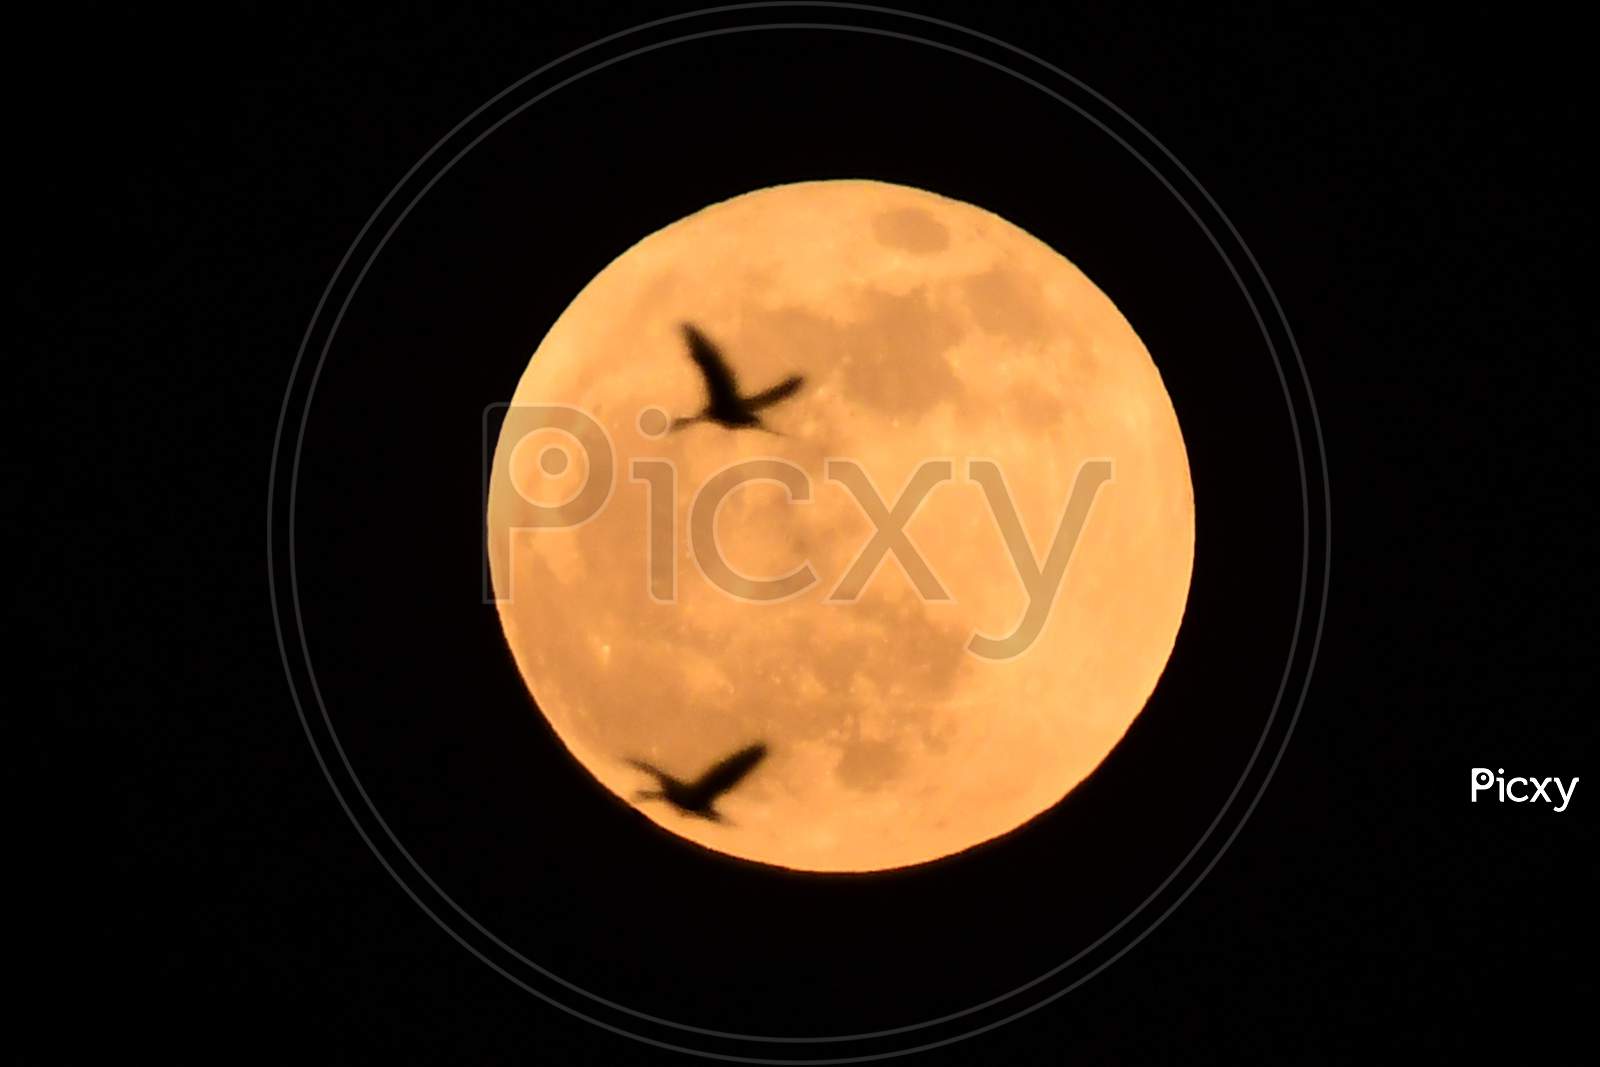 Bird passes near the Full Moon on the auspicious day of Kartik Purnima (full moon day)in Nagaon District of Assam on Nov 30,2020.